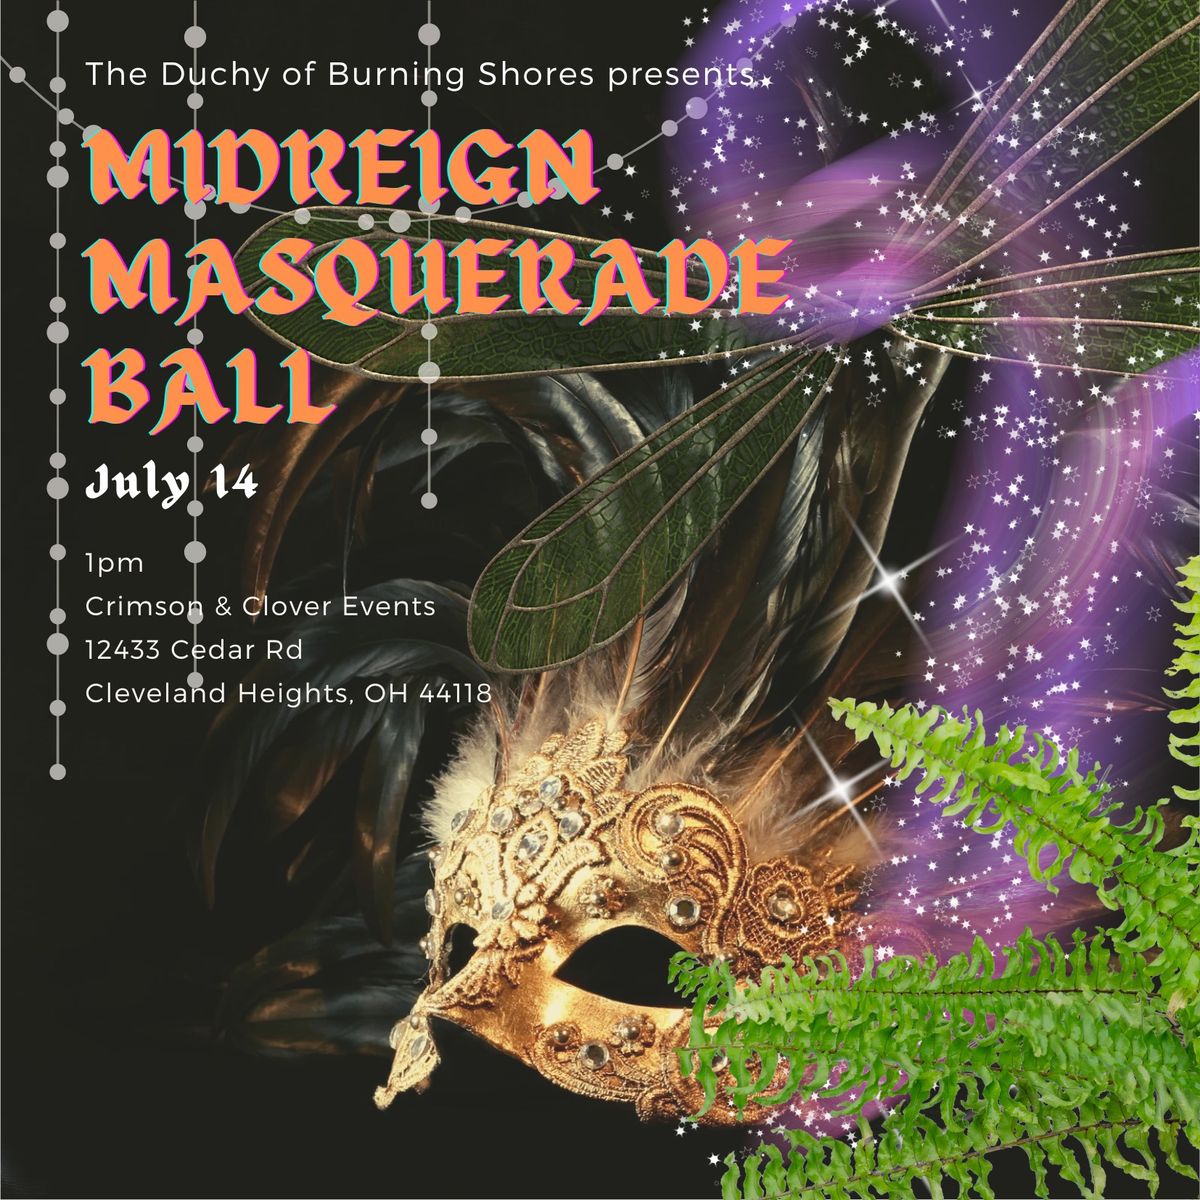 Midreign Masquerade Fairie Ball